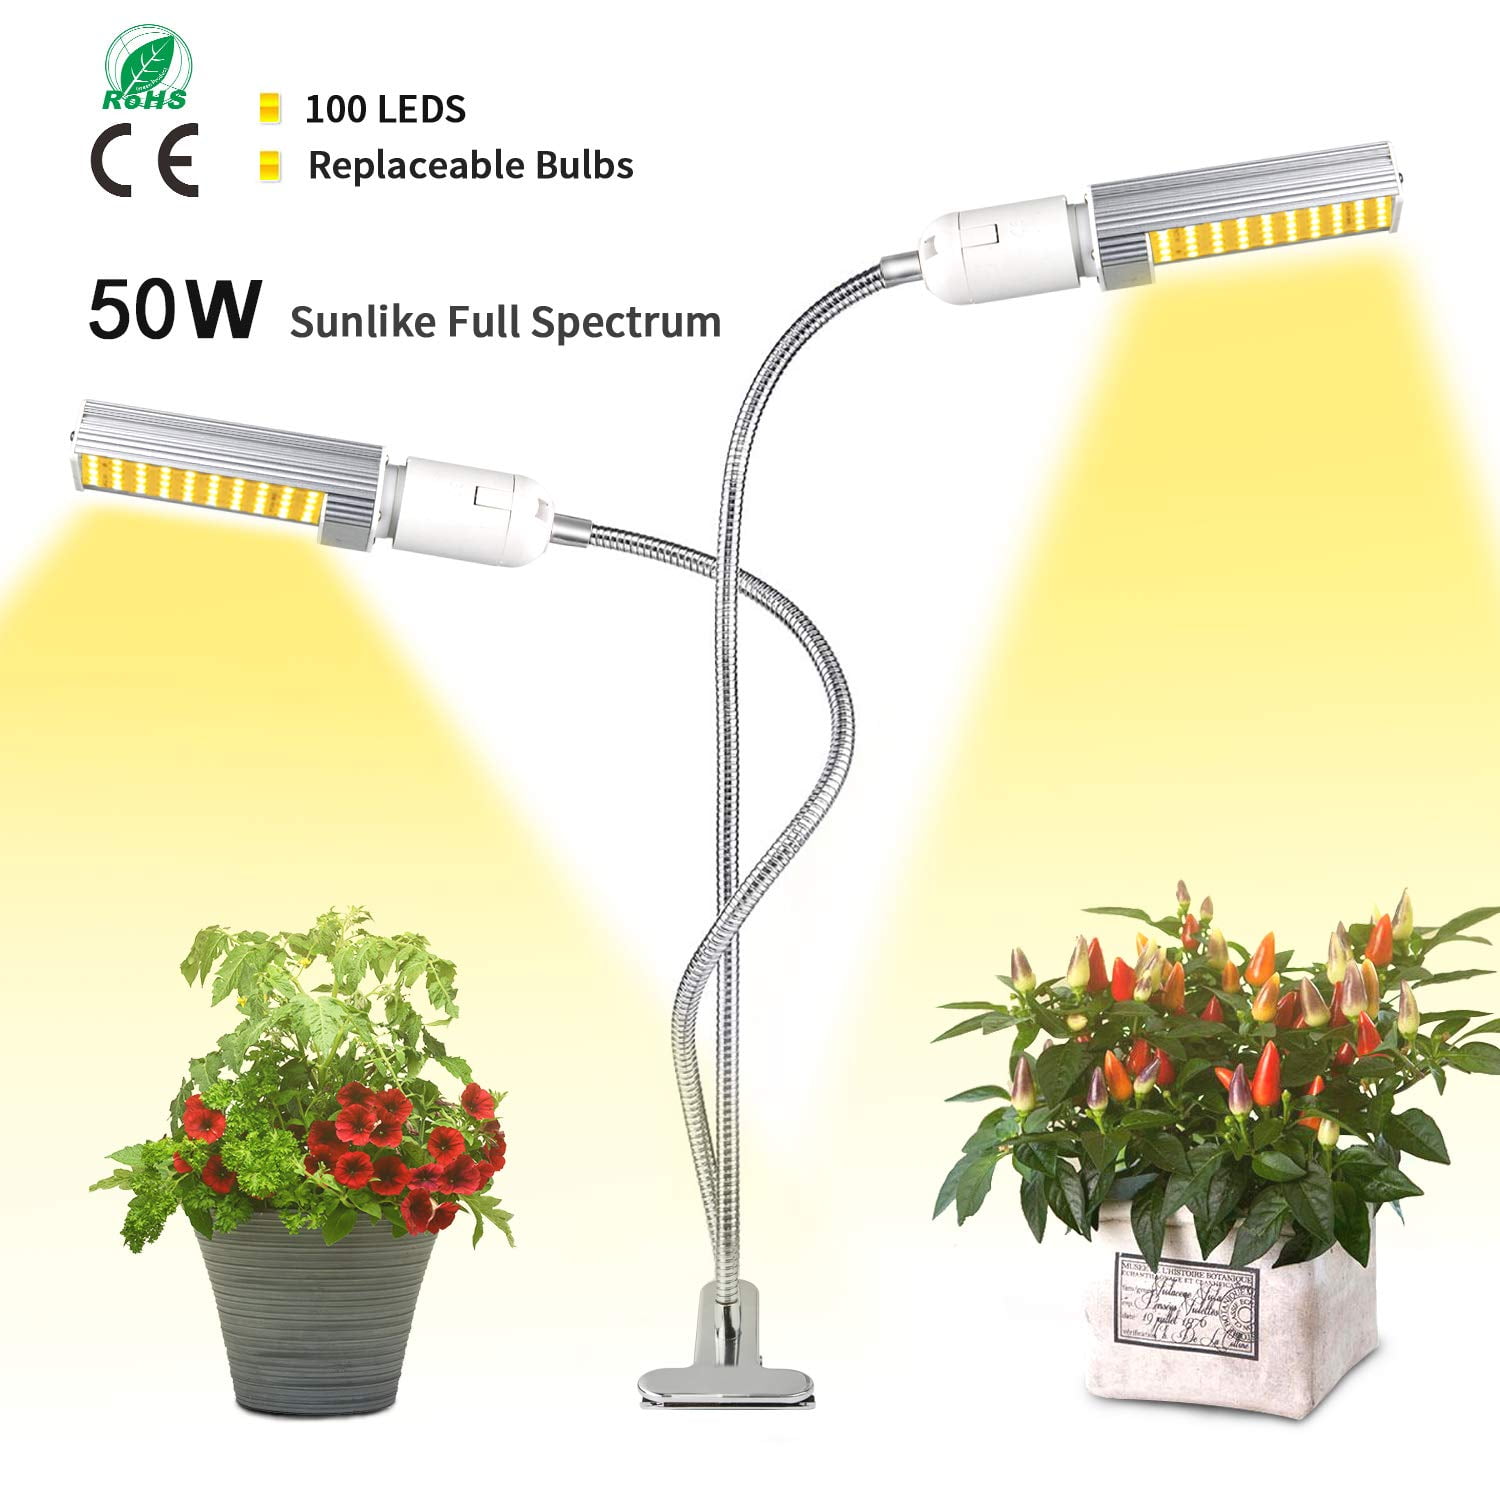 Full Spectrum Sunlike LED Grow Light Kit Indoor Greenhouse Plant Hydroponics 50W 